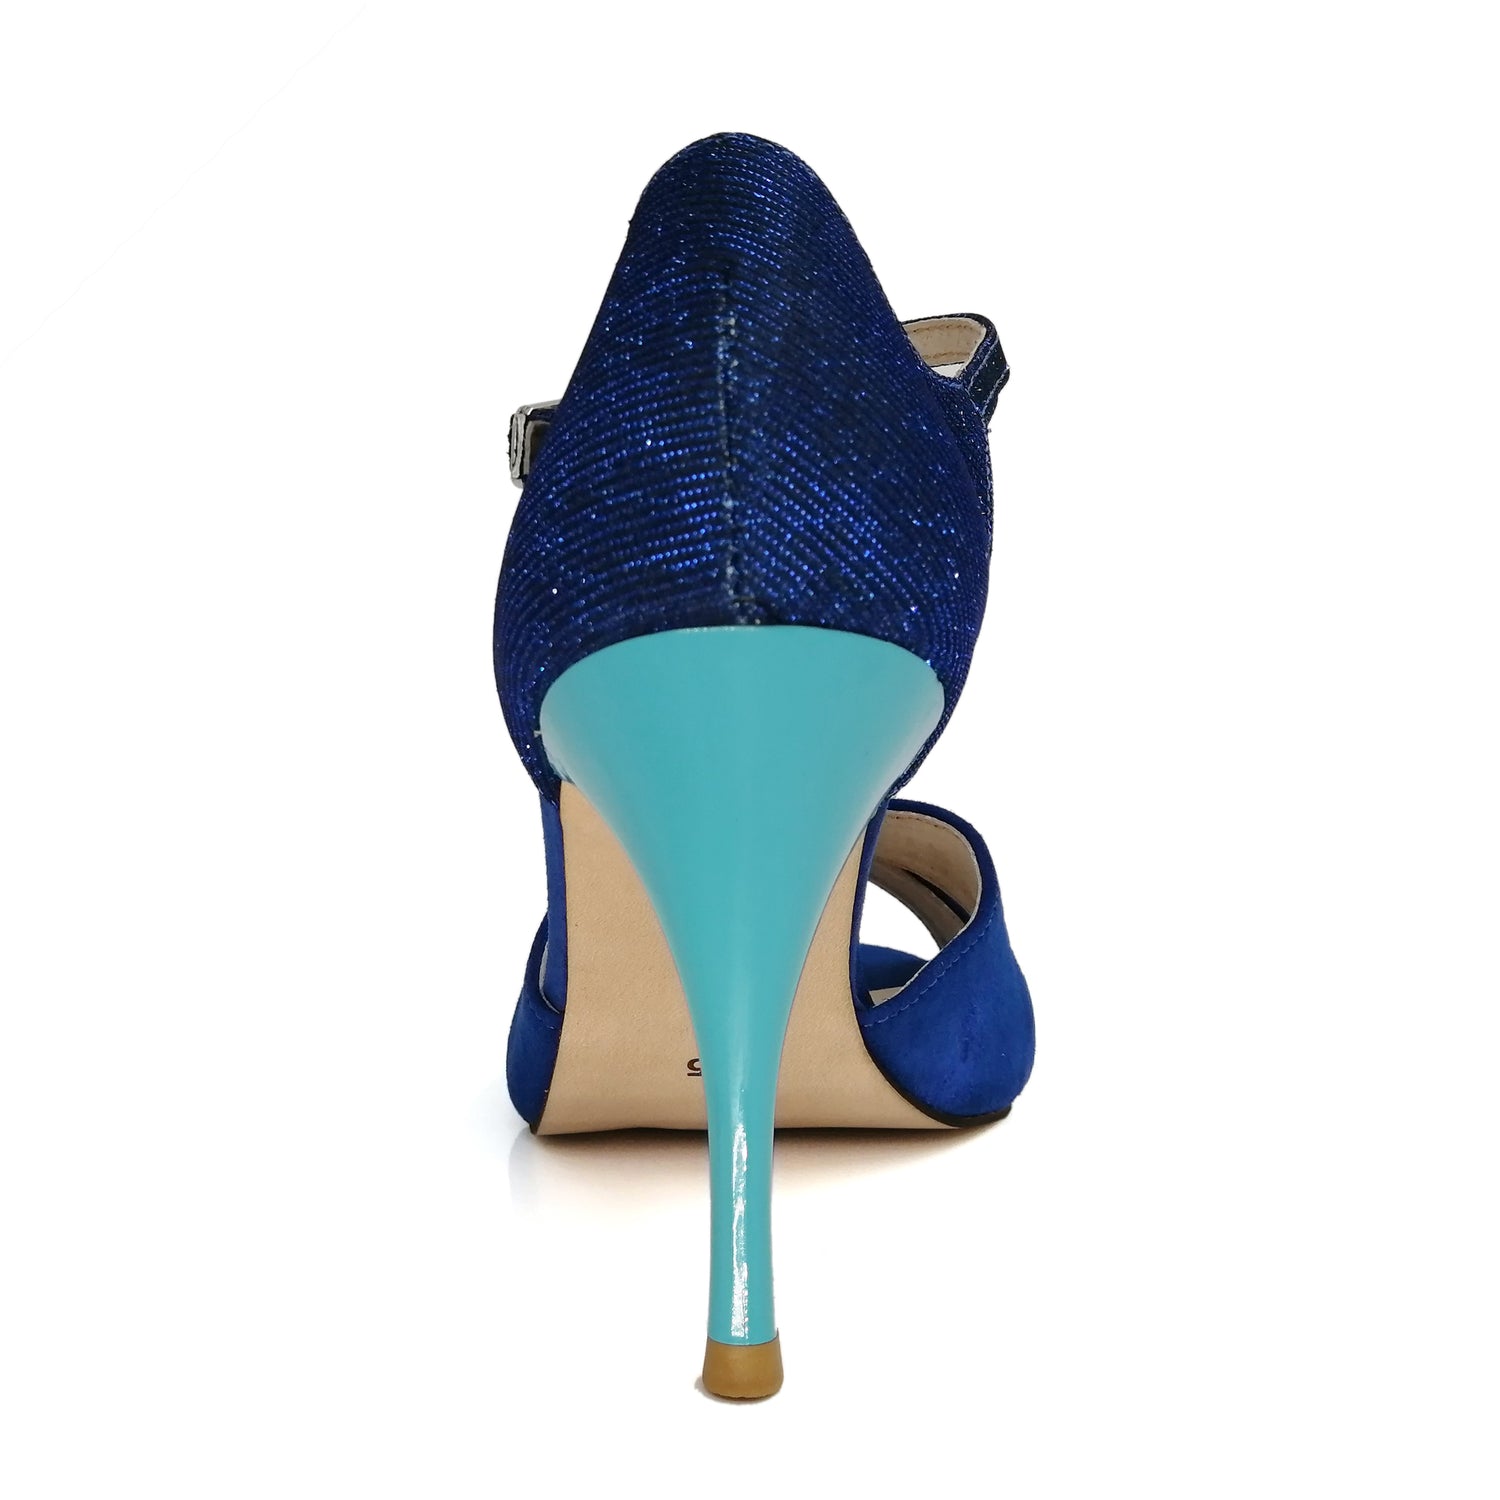 Pro Dancer Women's Argentine Tango Shoes High Heel Dance Sandals Leather Sole Blue PD9039A1